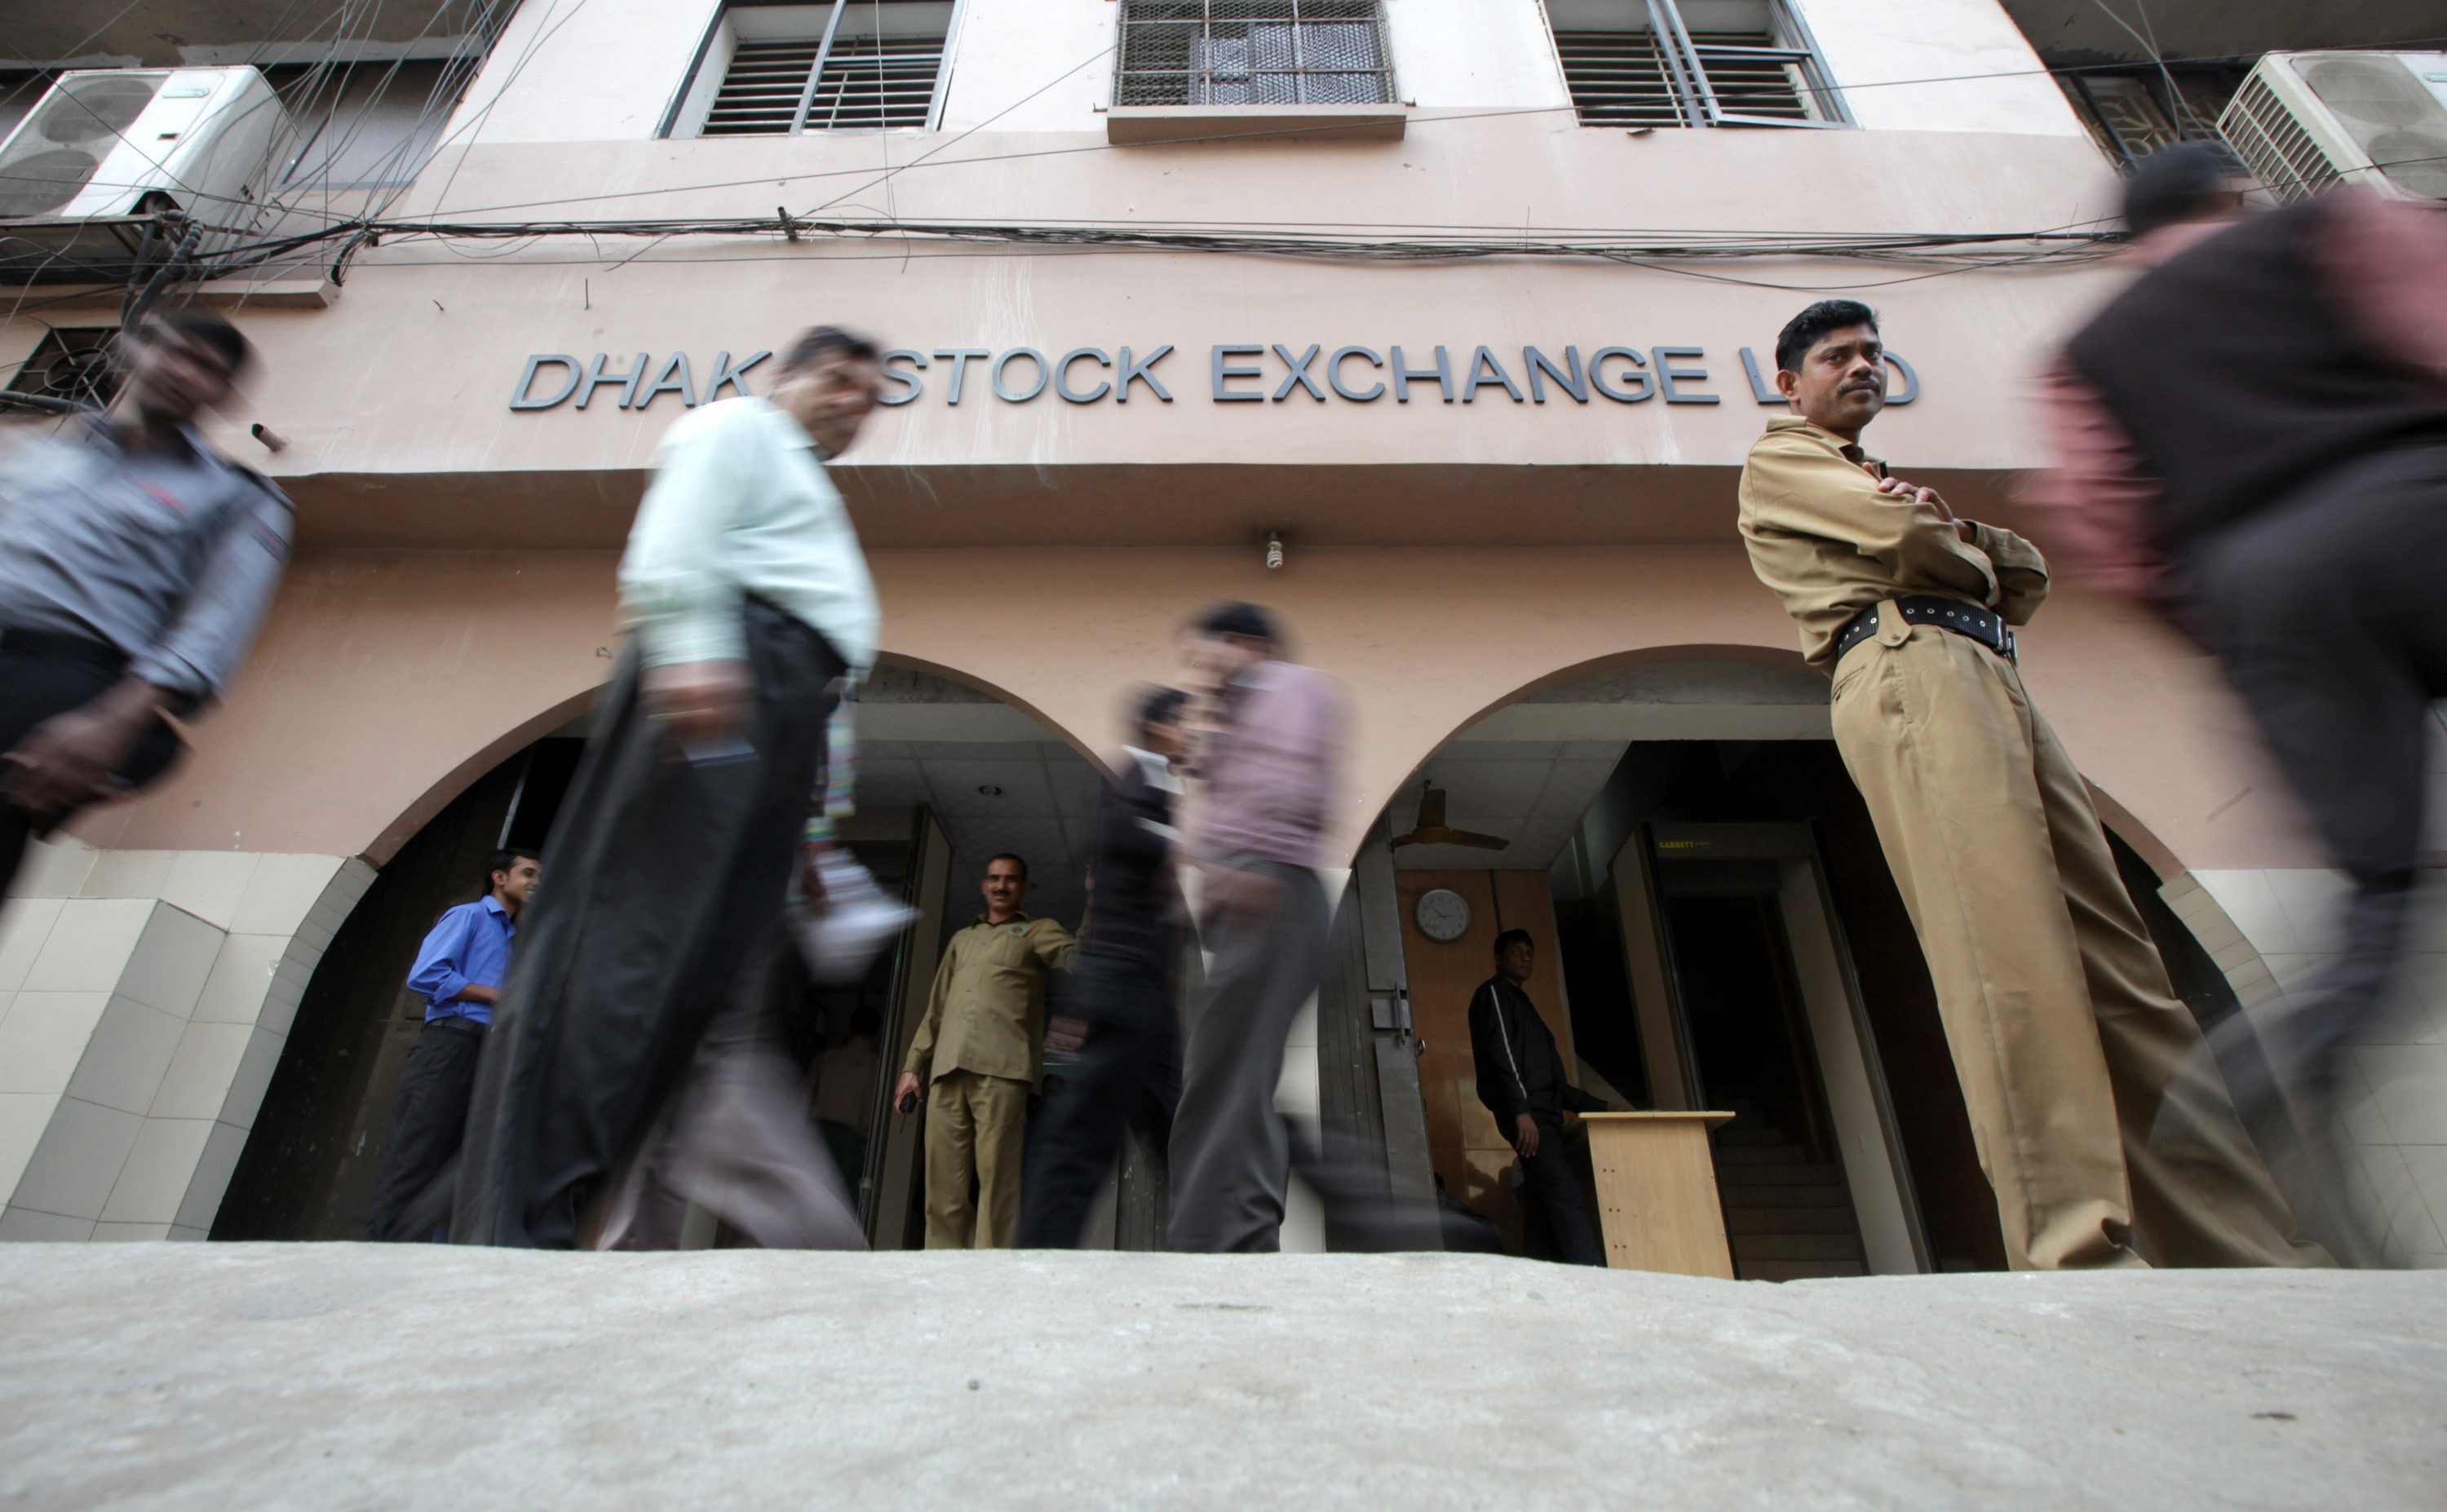 Dhaka Stock Exchange expects regulatory nod for 25% stake sale next week